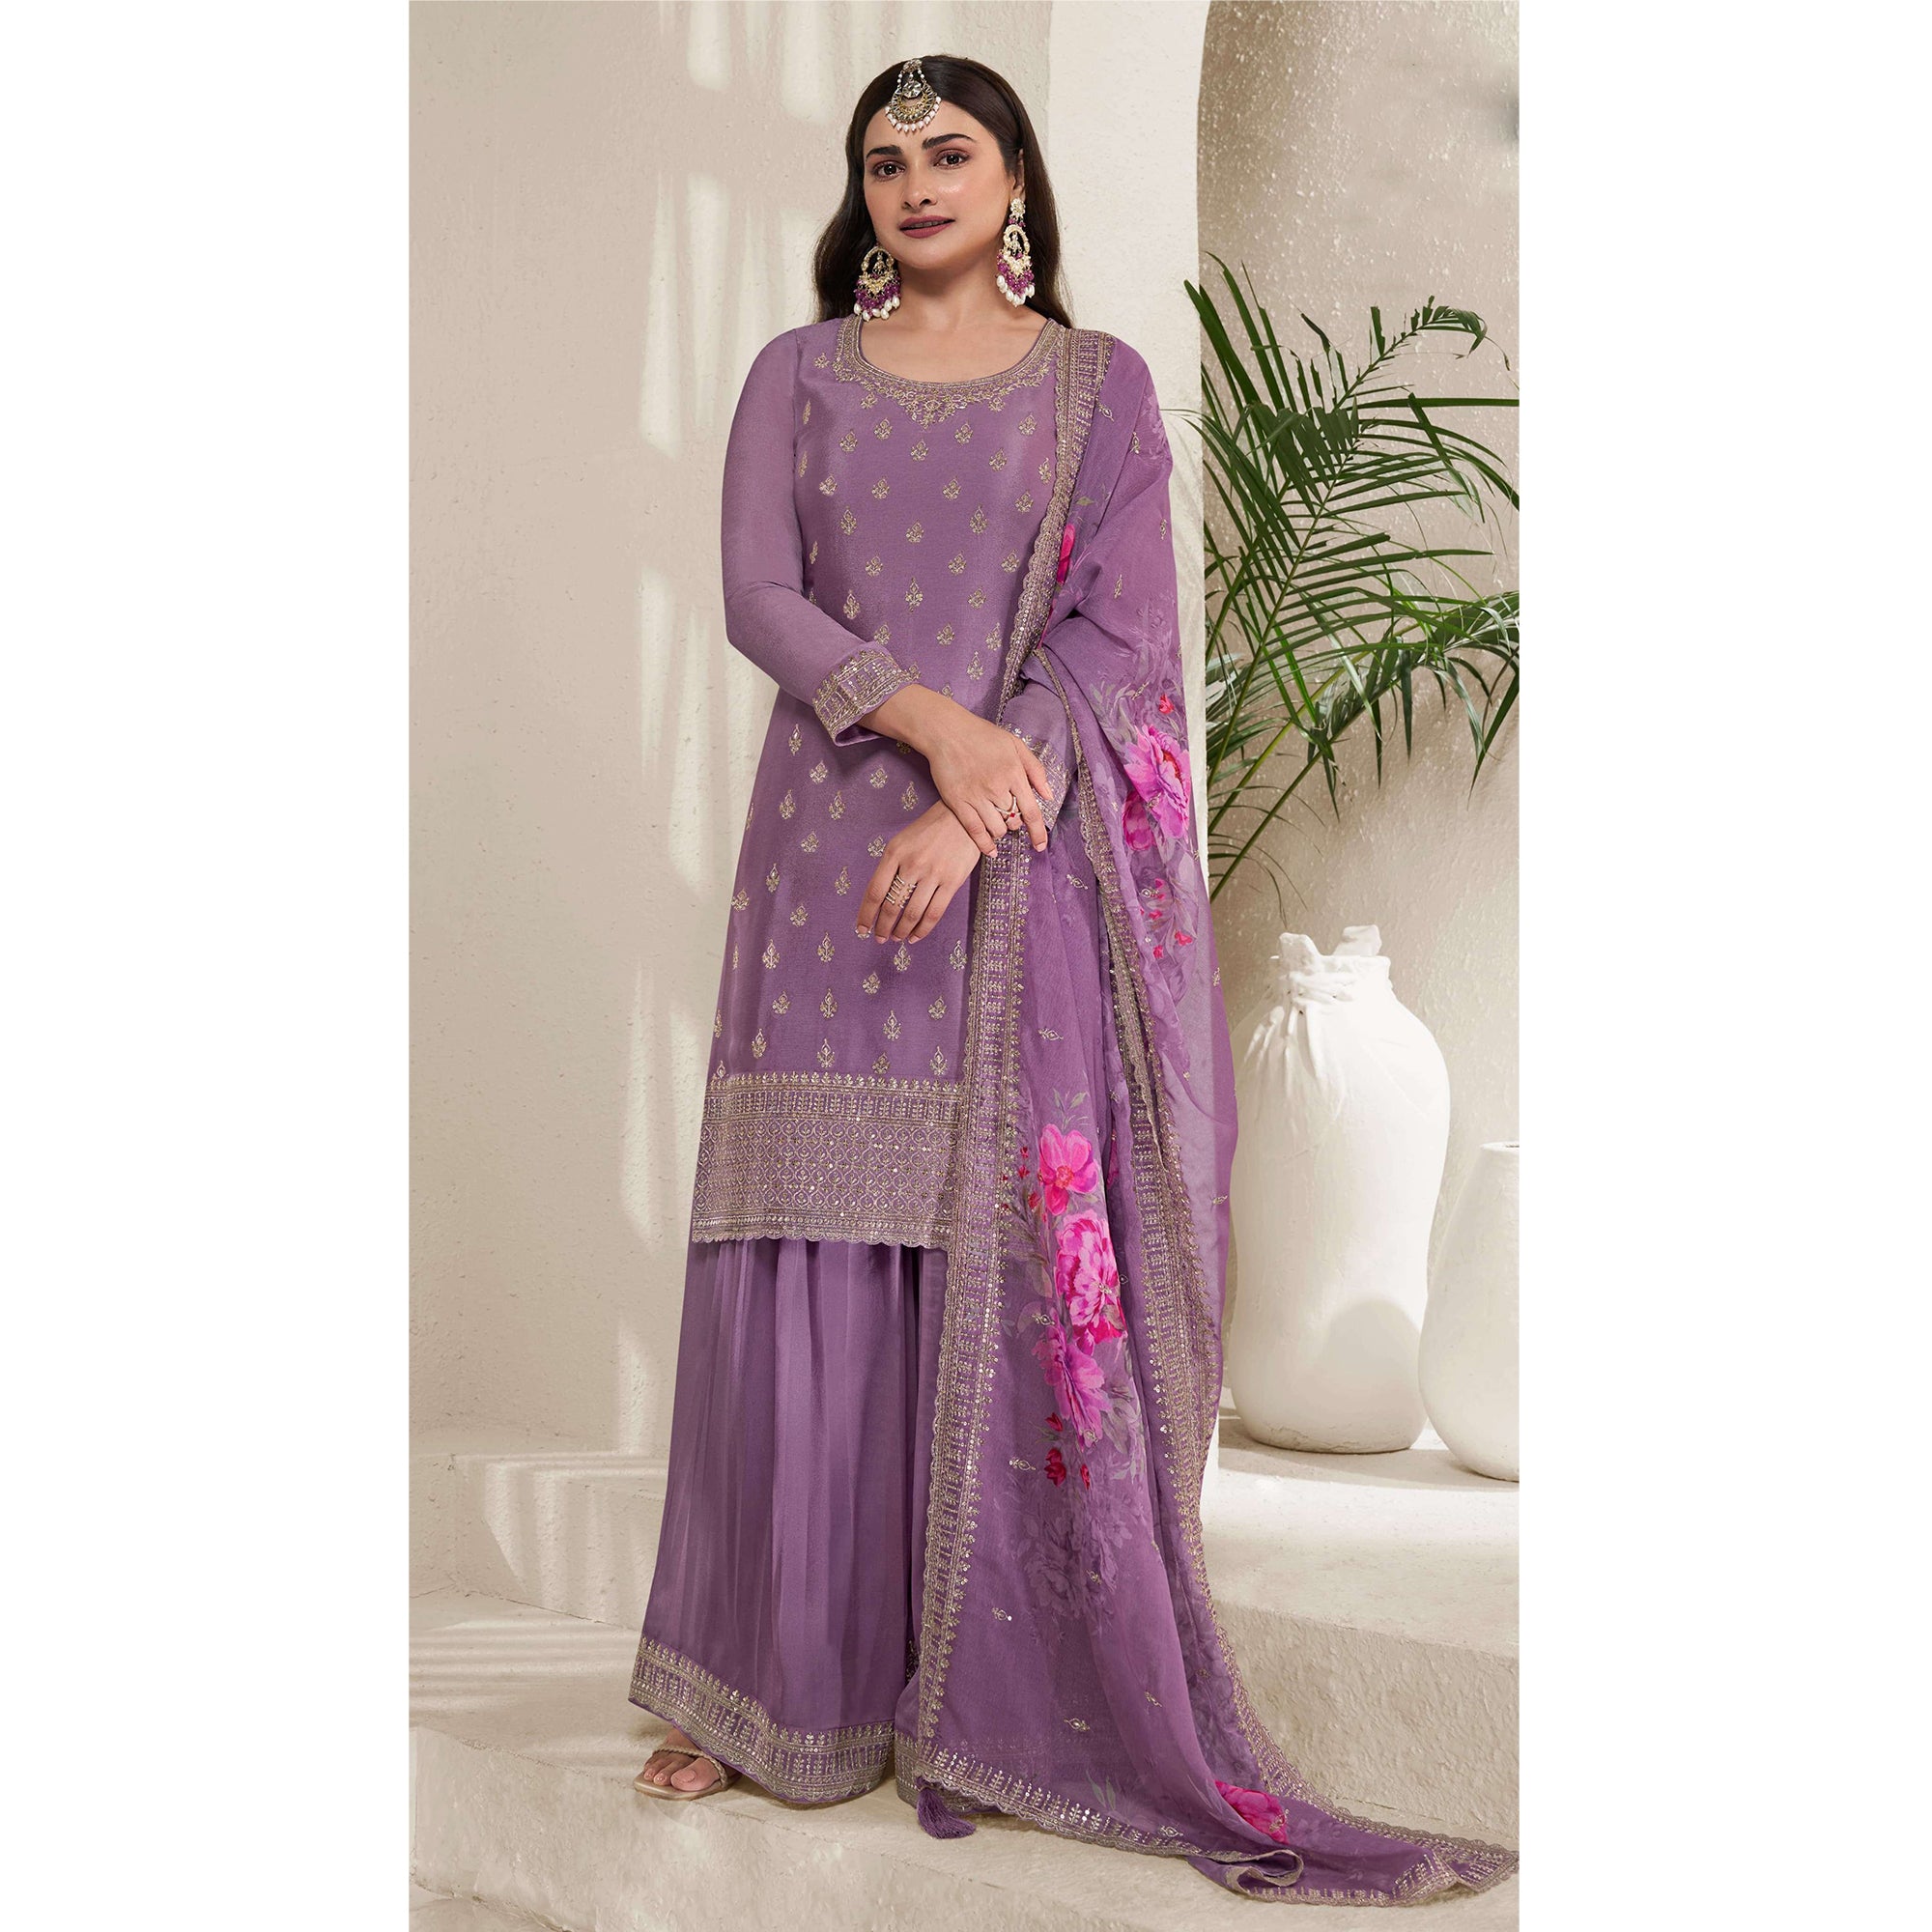 Light Purple Color Wedding Reception Wear Embroidery Worked Salwar Kameez Plazzo Suits